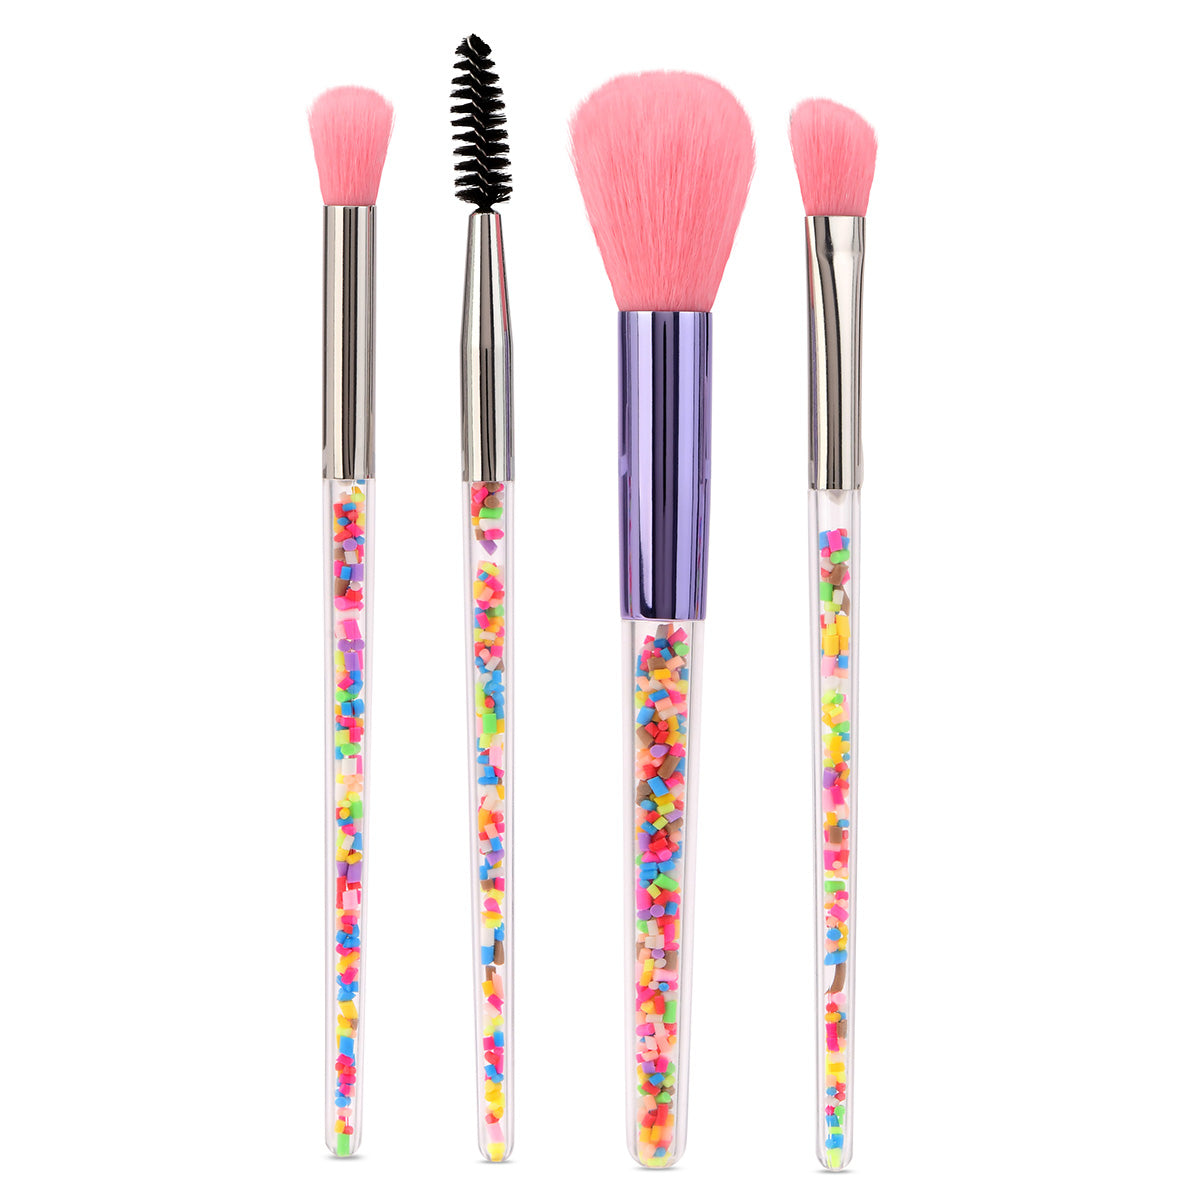 Iscream - Sprinkles Eye Makeup Brushes Set